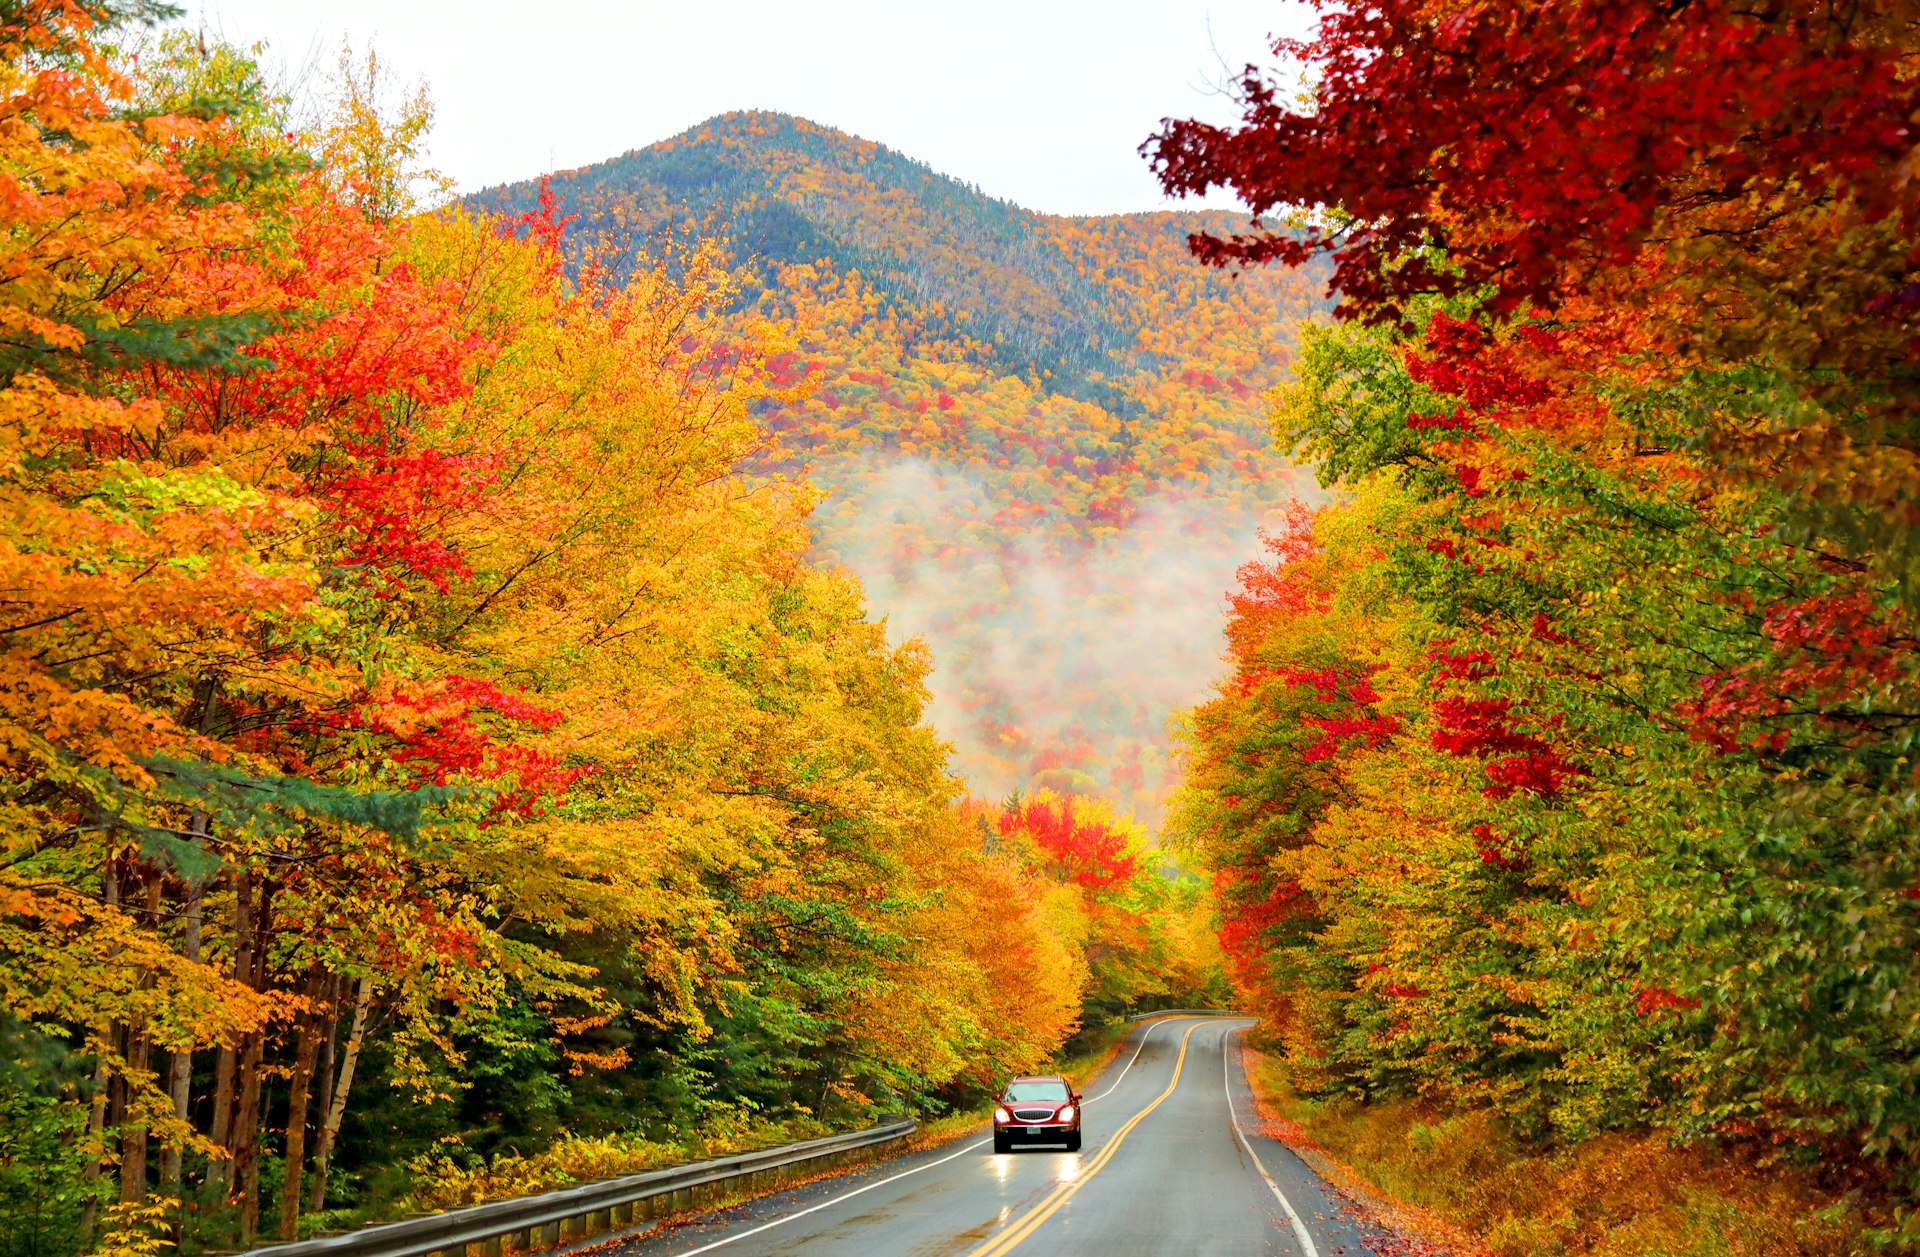 A car drives through fall foliage along the Kancamagus Highway, Northern New Hampshire, New England USA